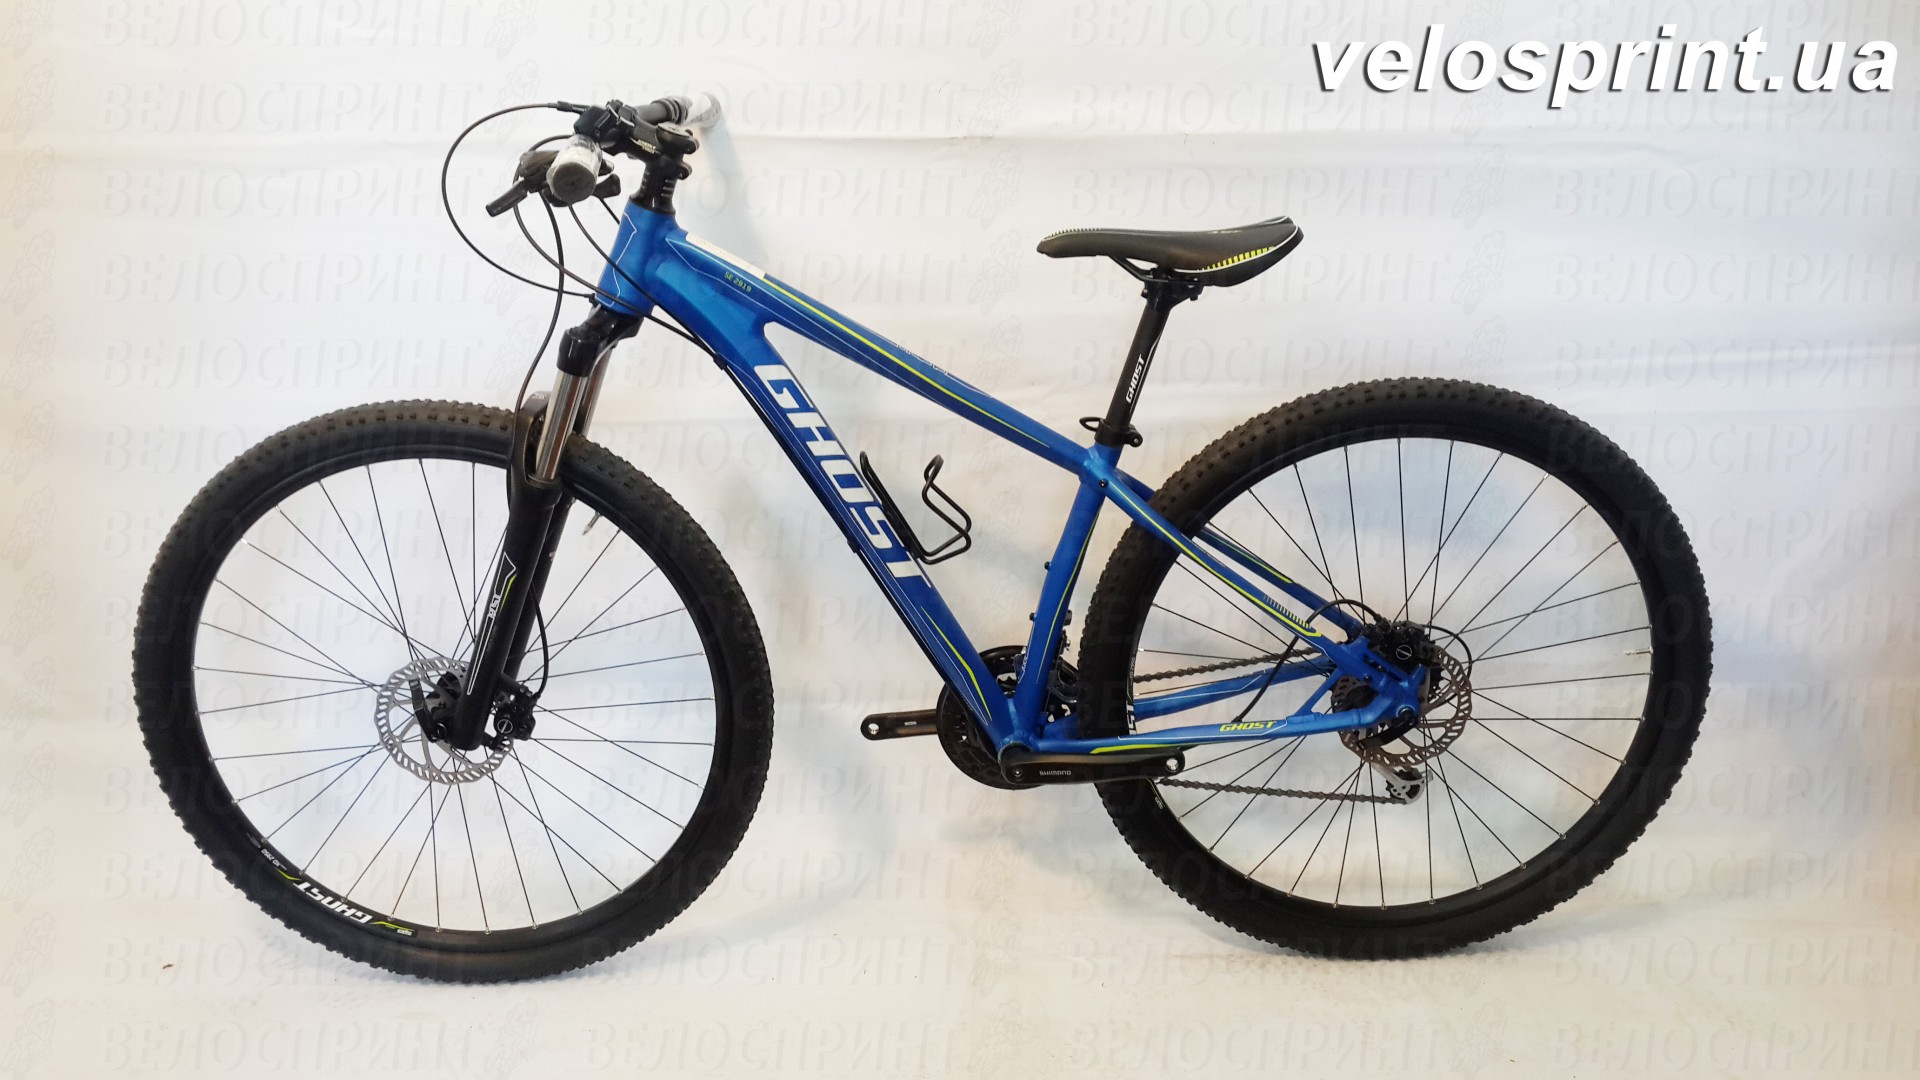 Велосипед GHOST SE 2919 blue/white/green общий вид год 2014